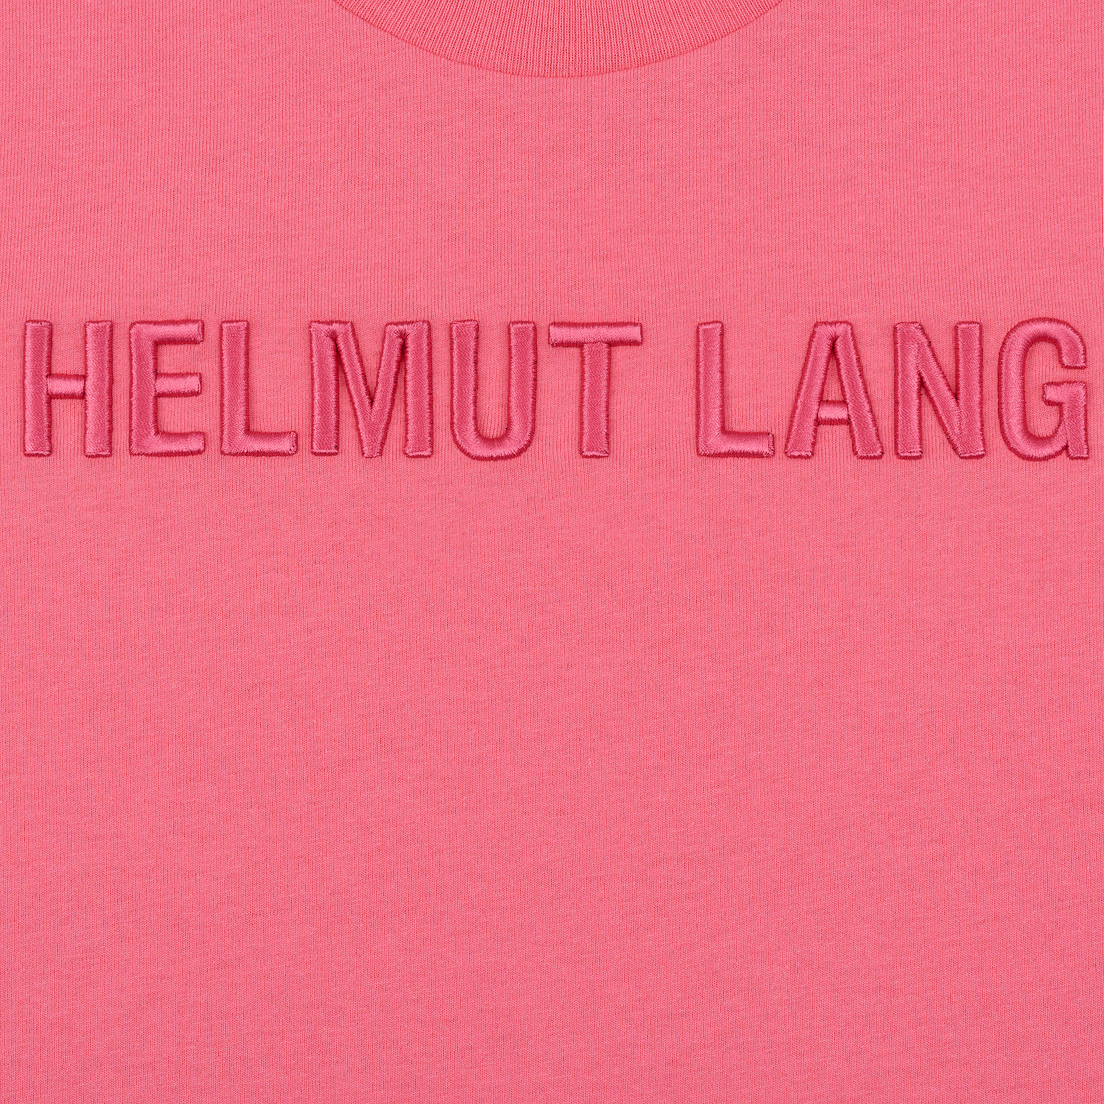 Helmut Lang Мужская футболка Standard Monogram